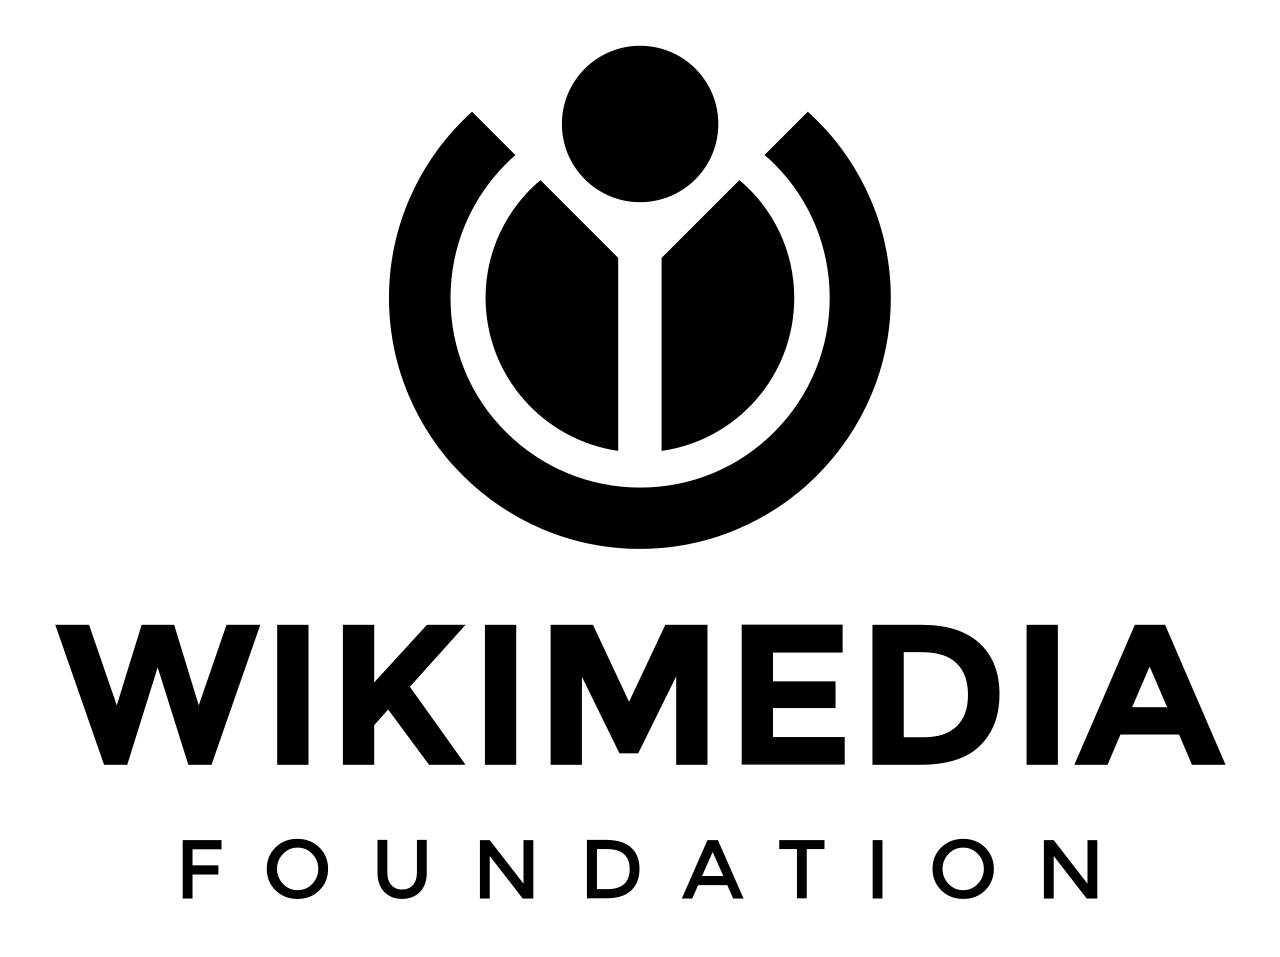 Wikimedia_Foundation_logo_-_vertical.svg.png